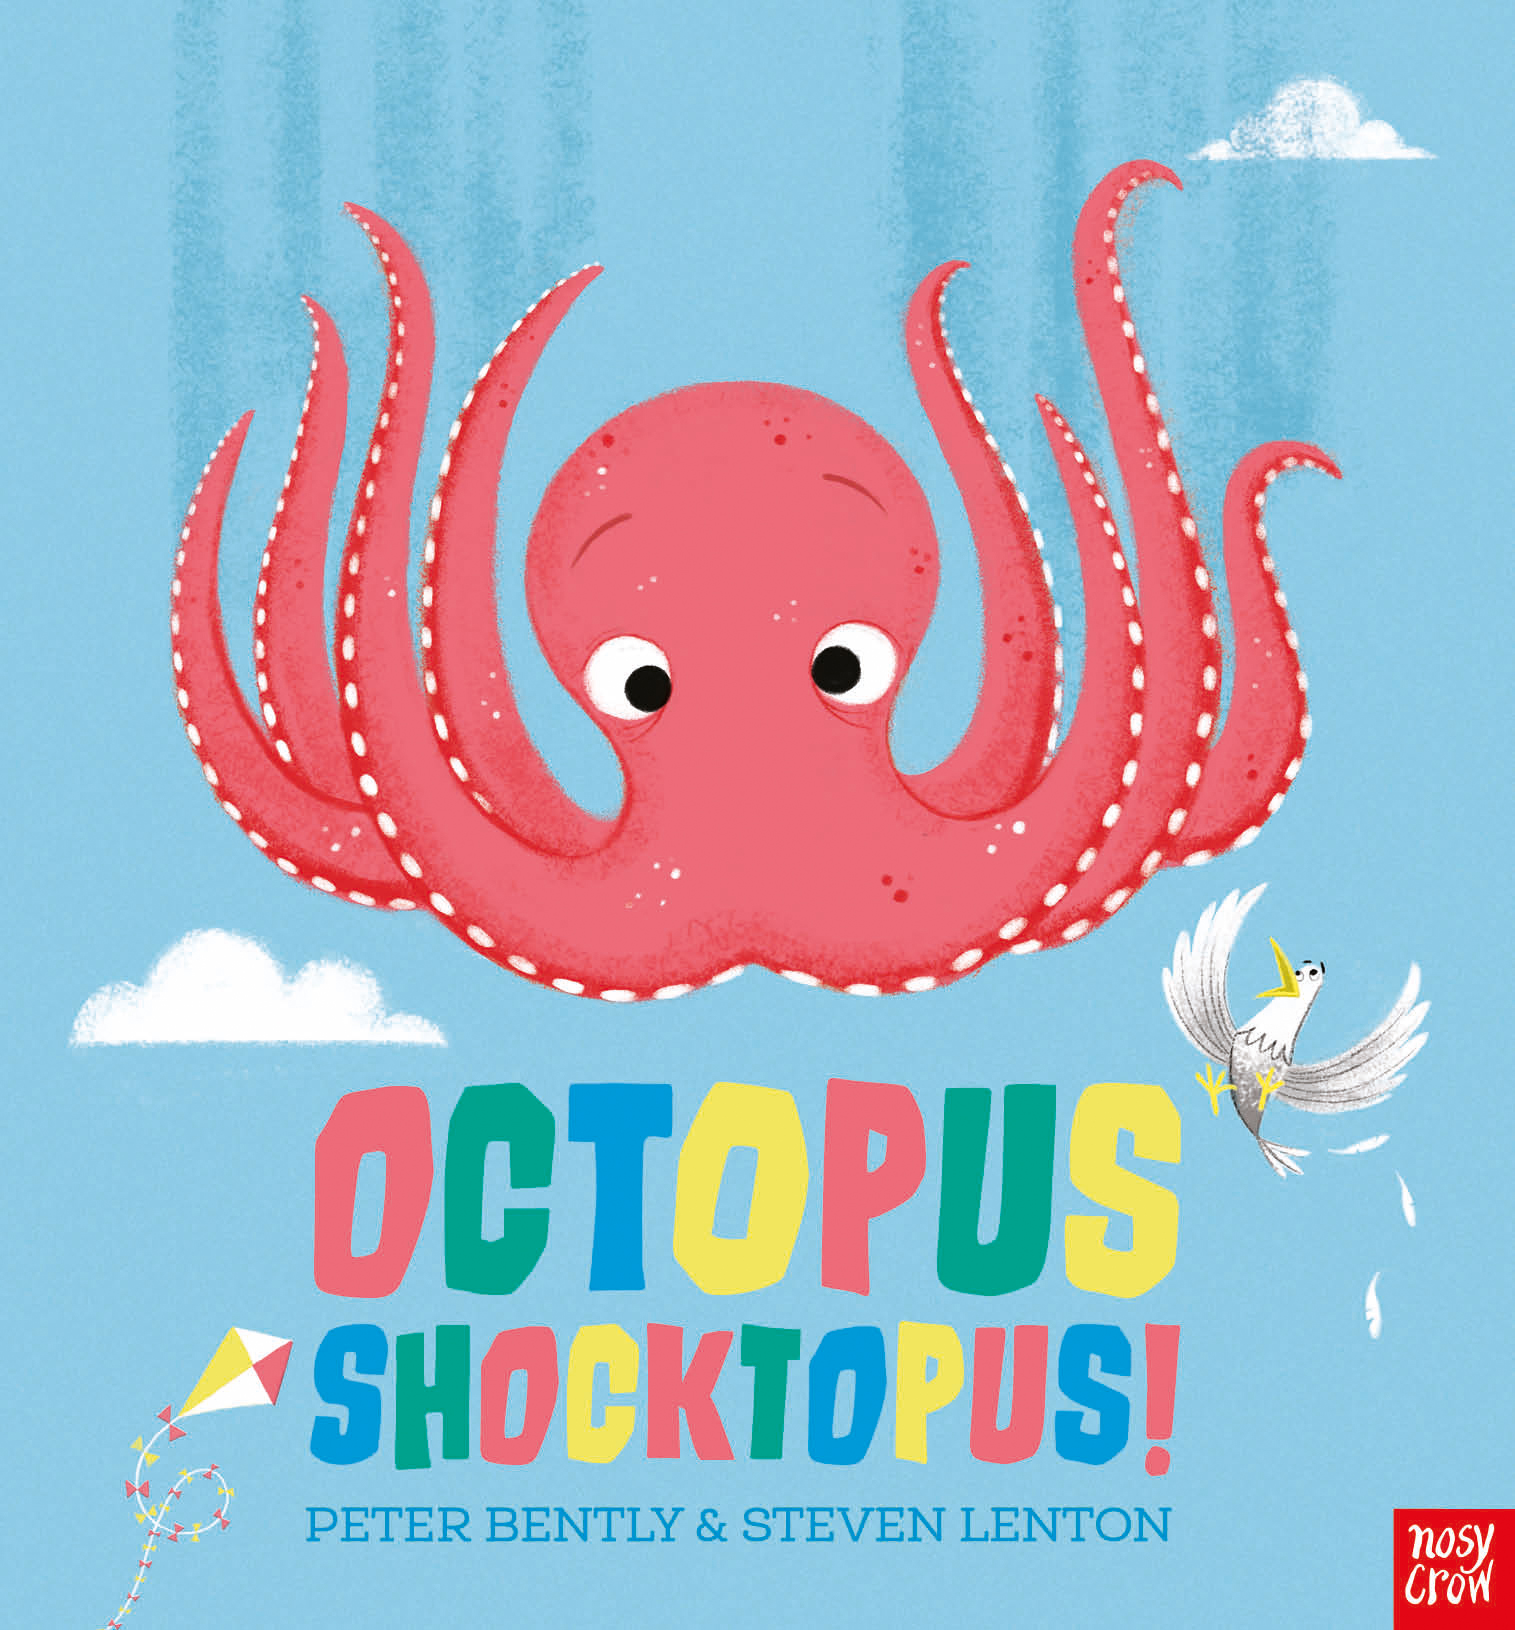 Octopus Shocktopus by Peter Bently, Steven Lenton